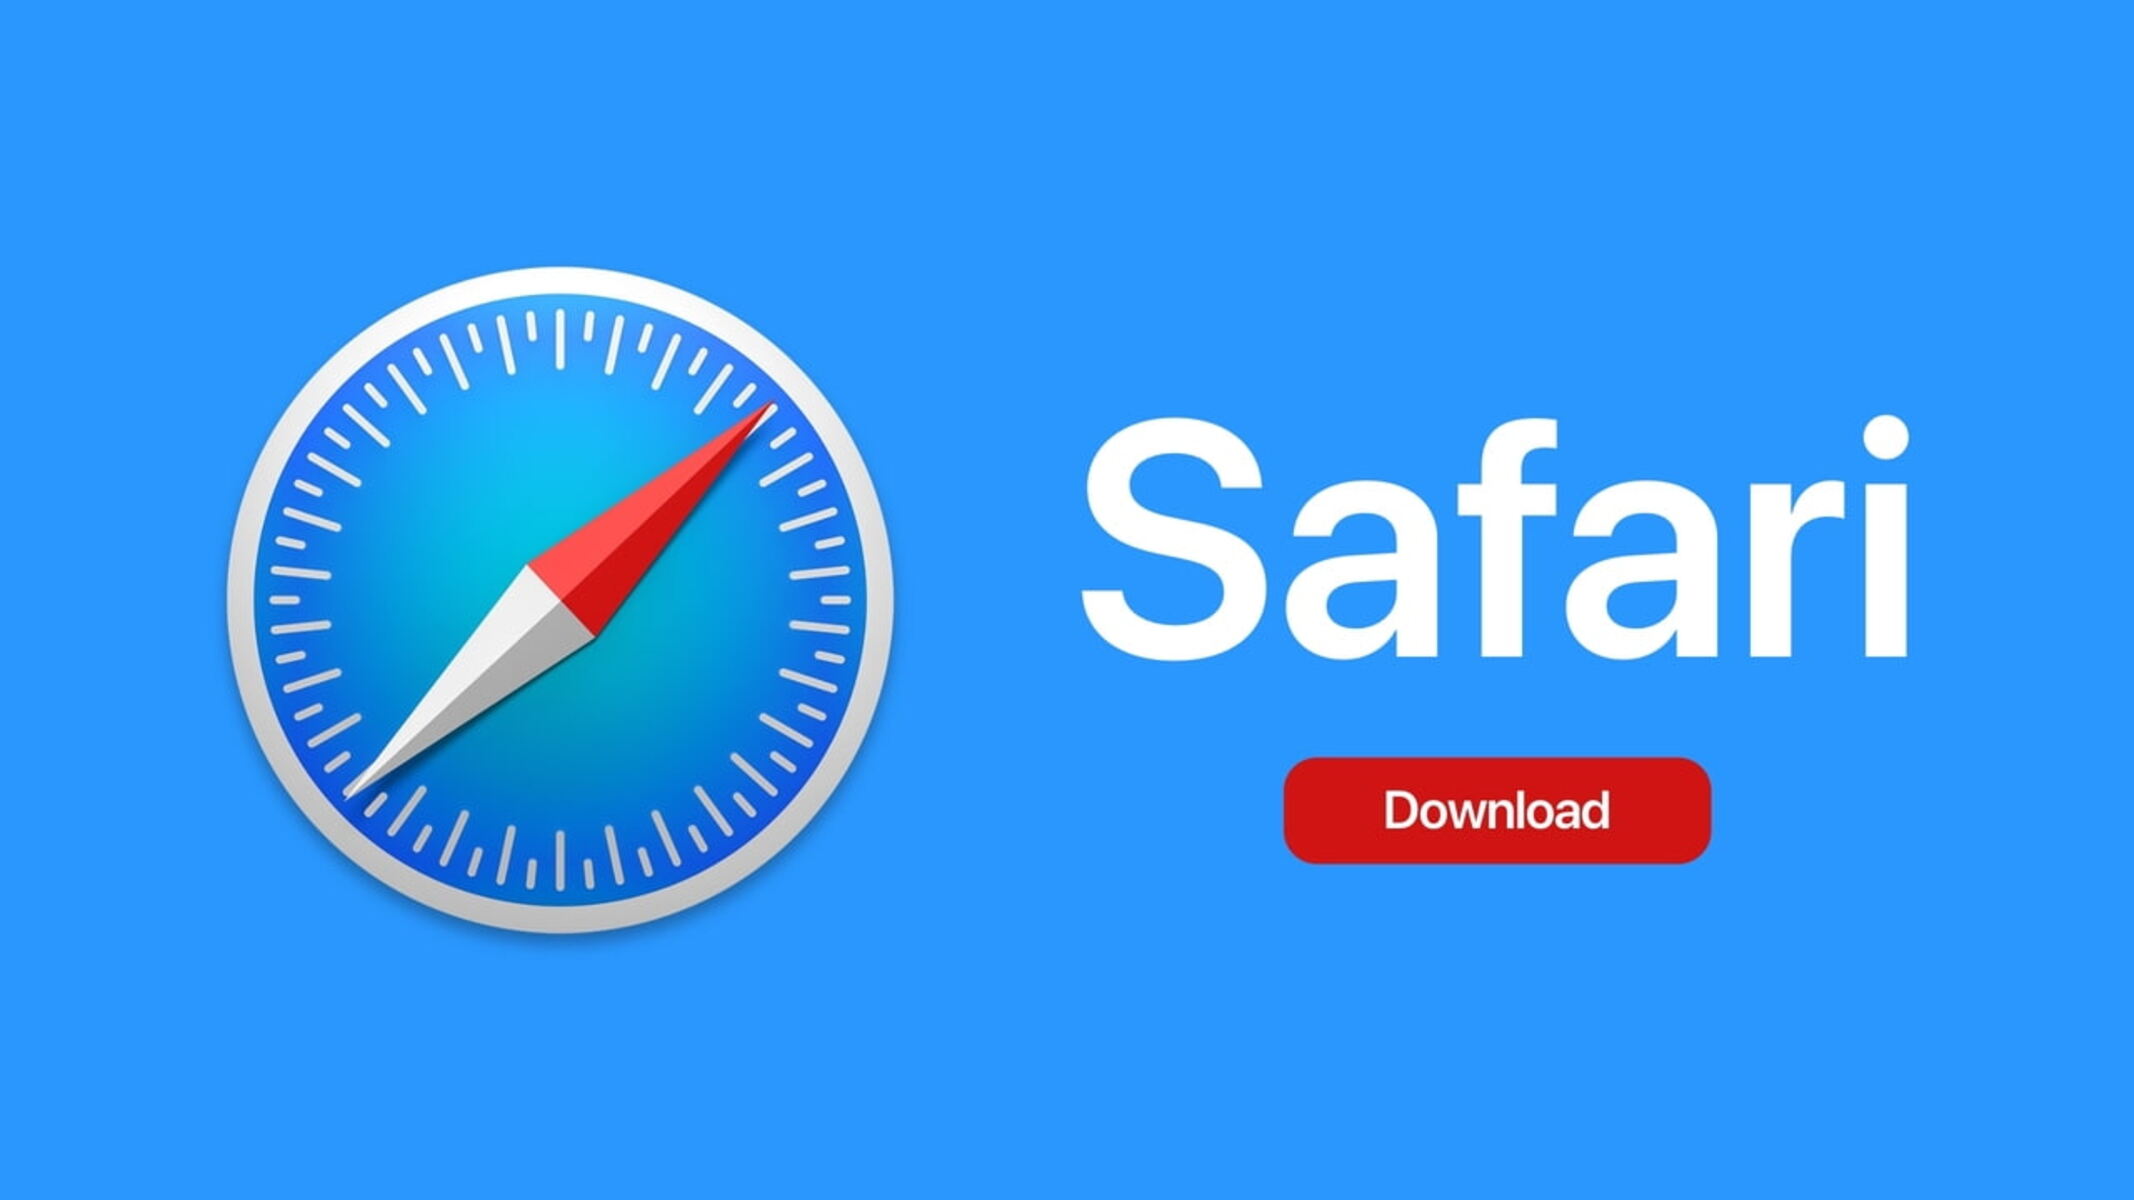 How Do I Download Safari